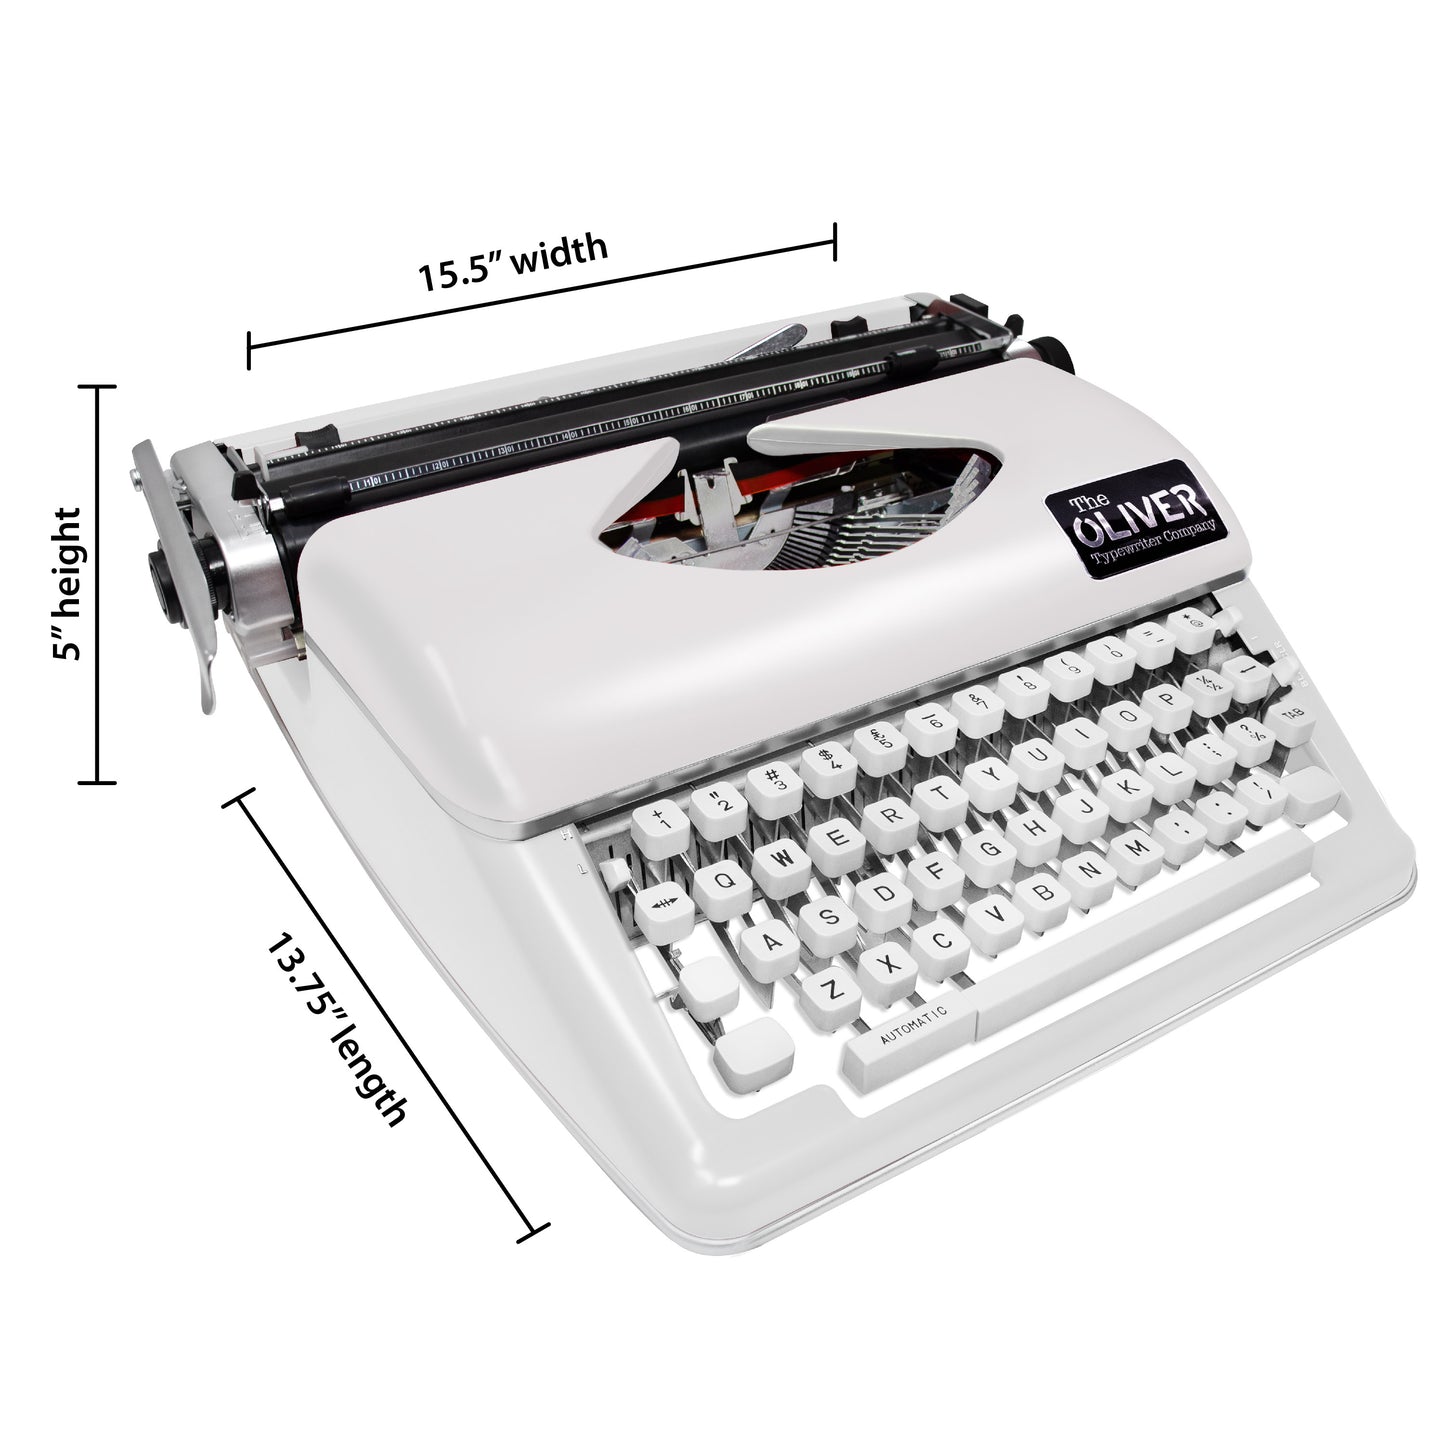 The Oliver Typewriter Company Timeless Manual Typewriter, White